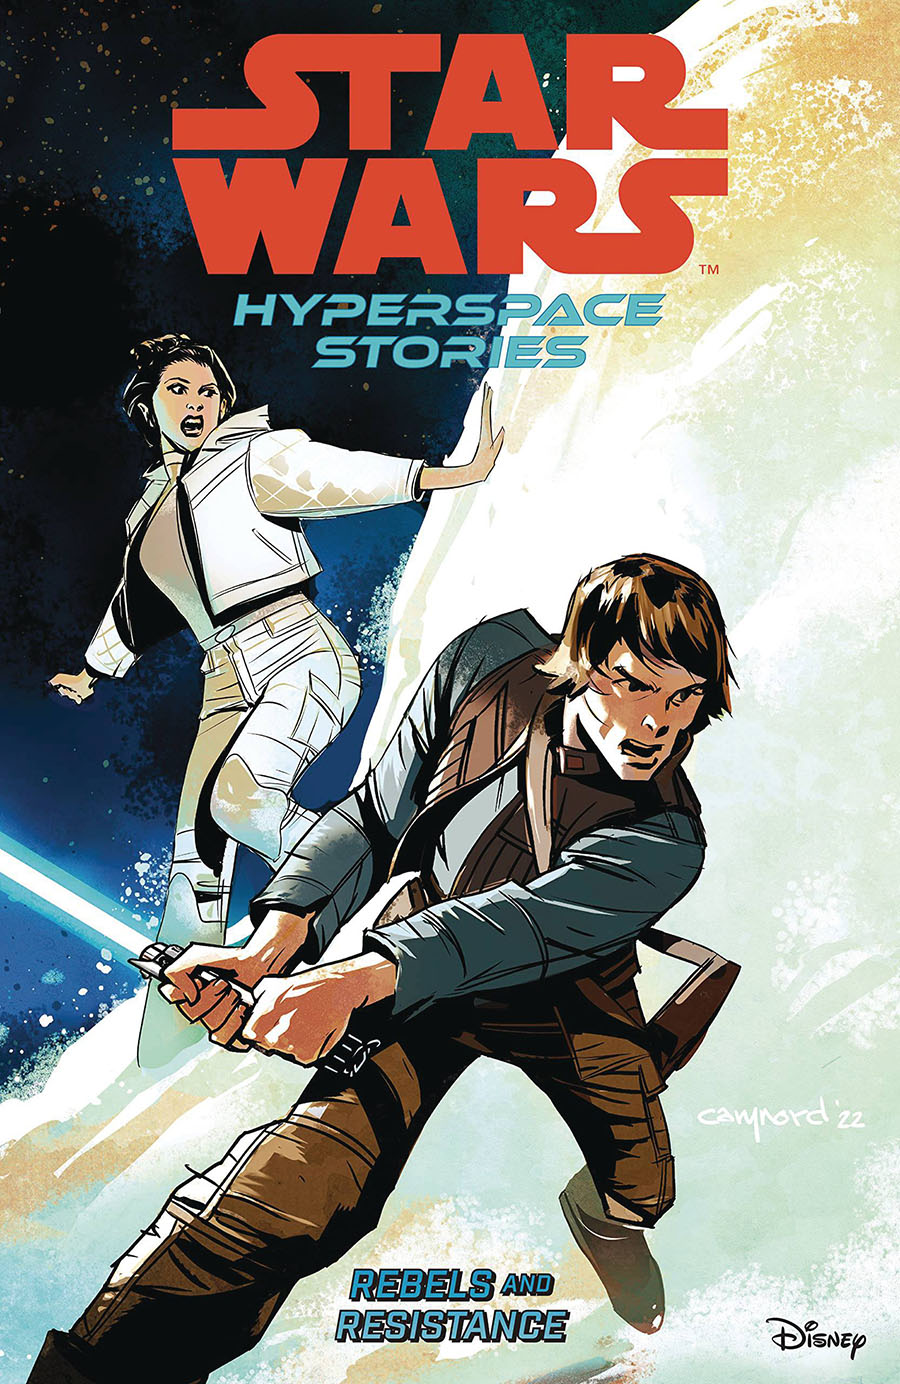 Star Wars Hyperspace Stories Vol 1 TP